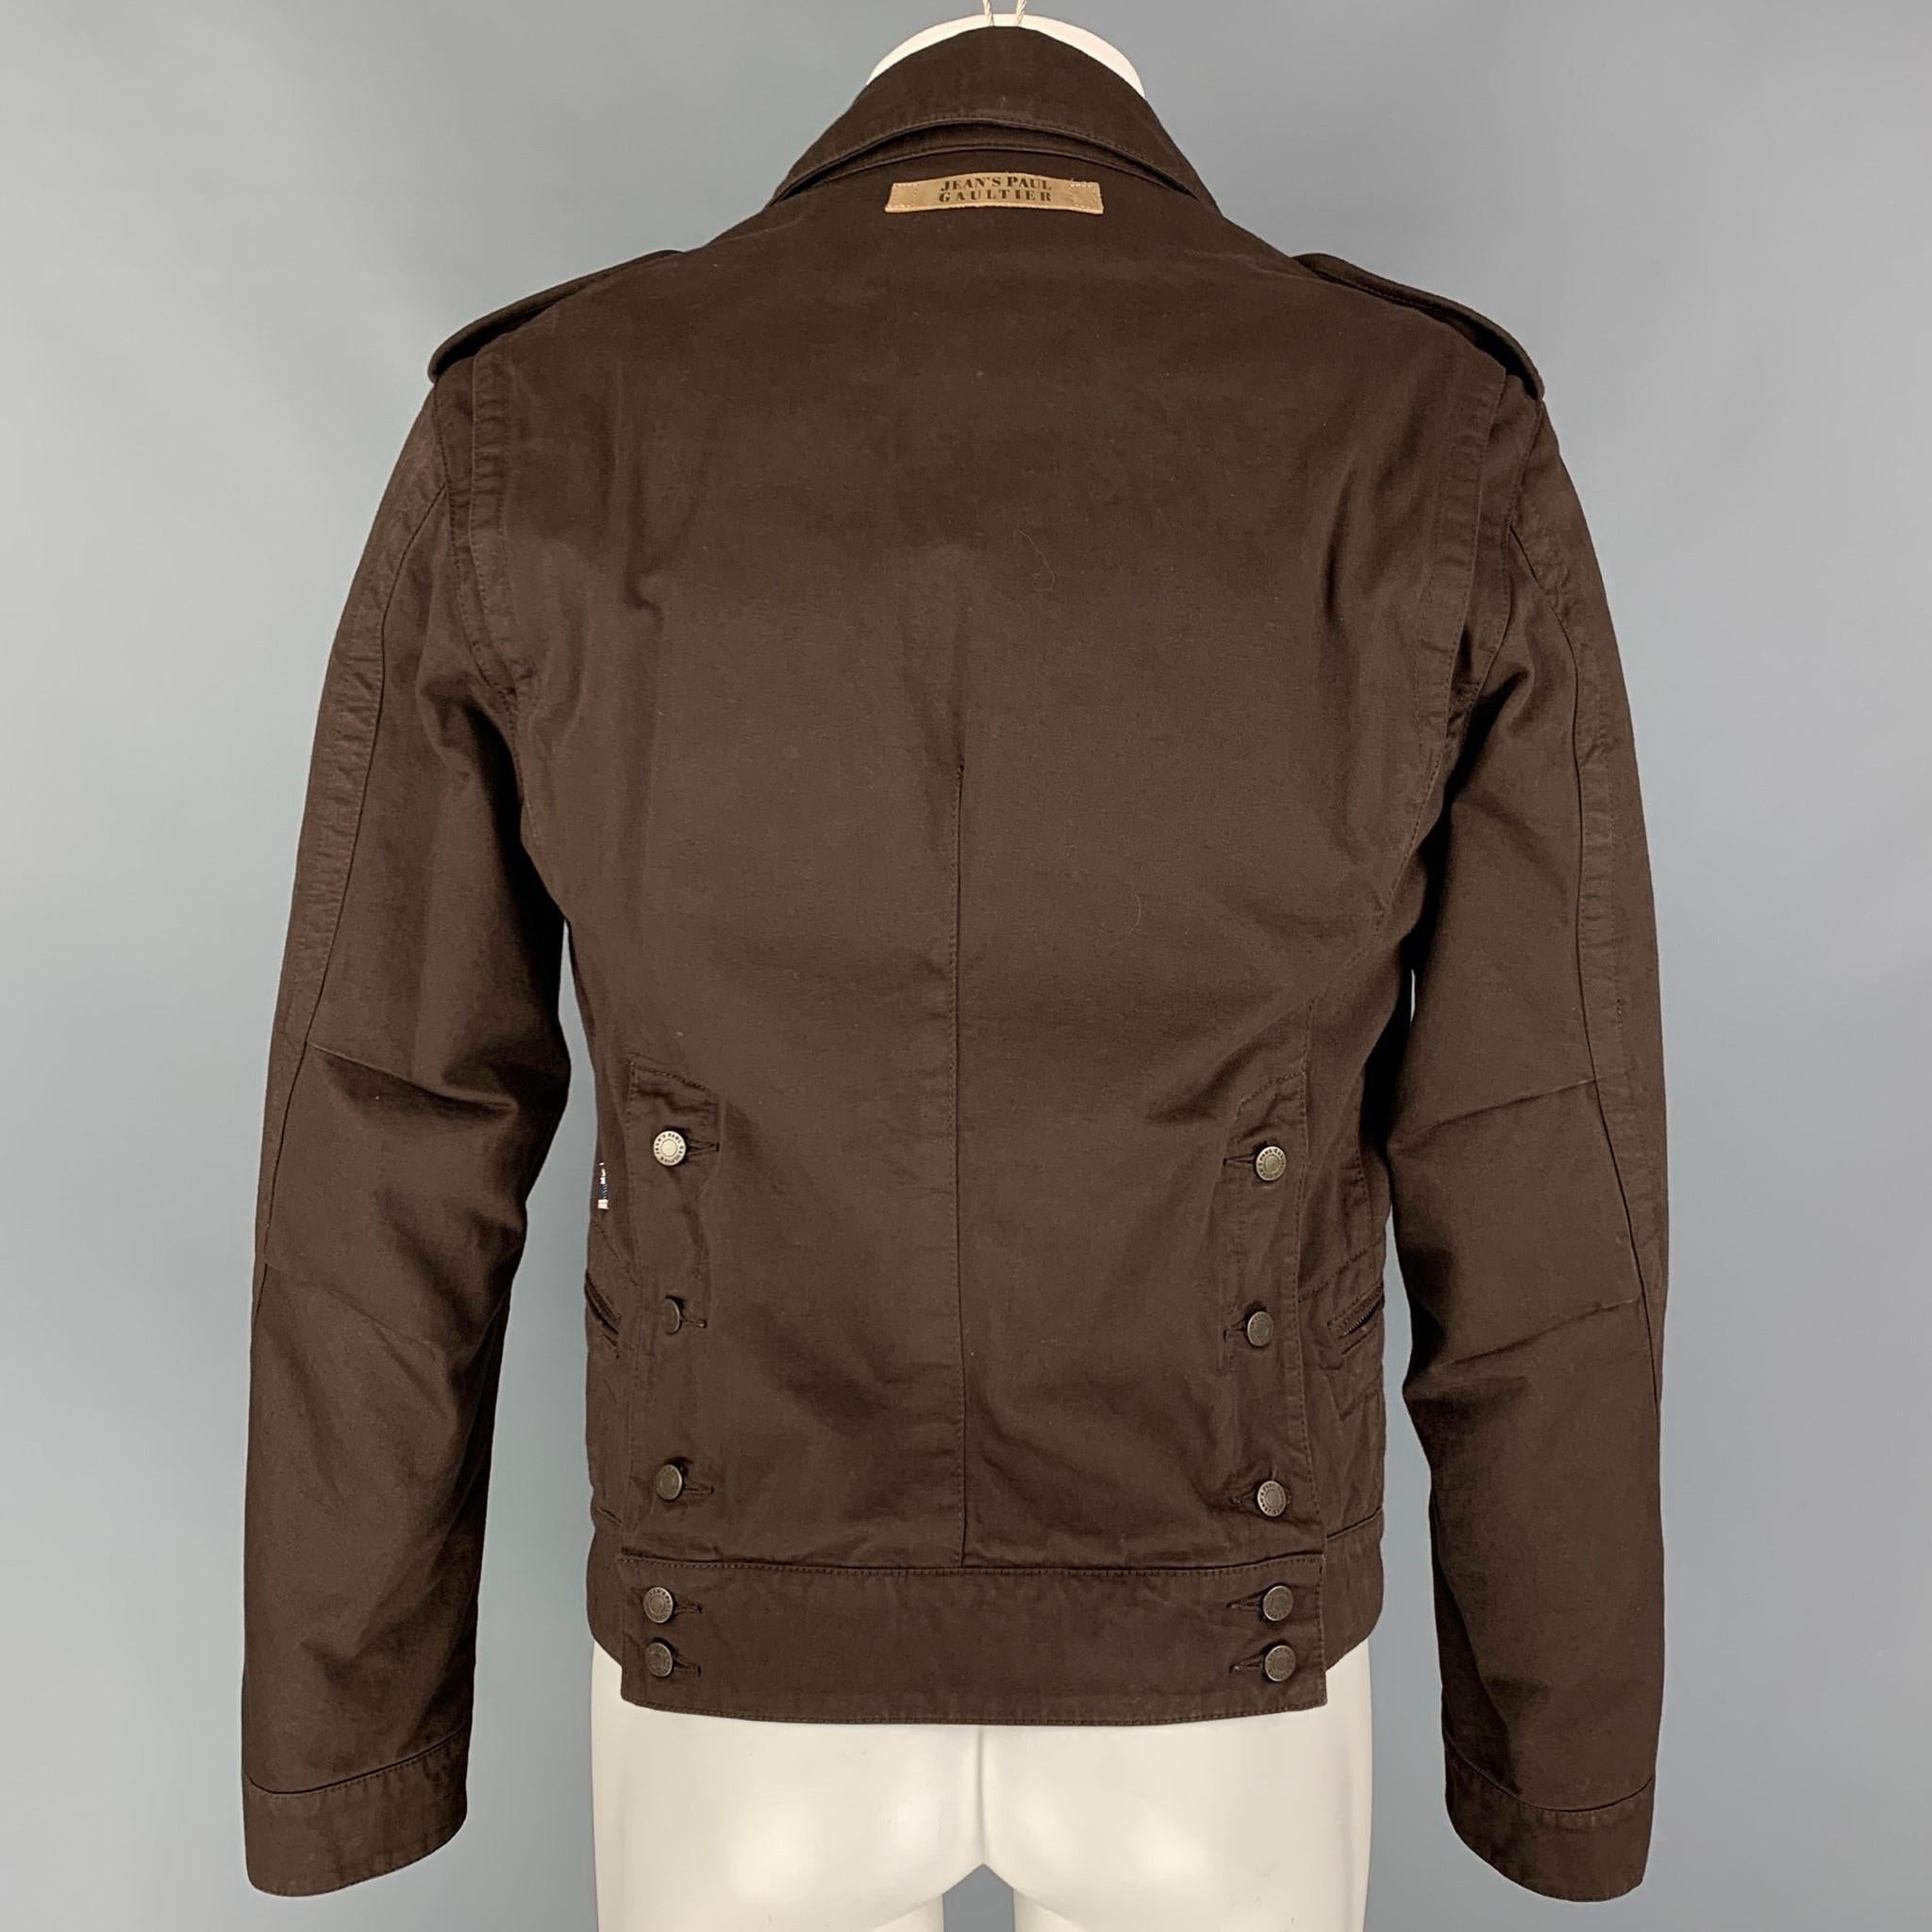 sailor vest jacket